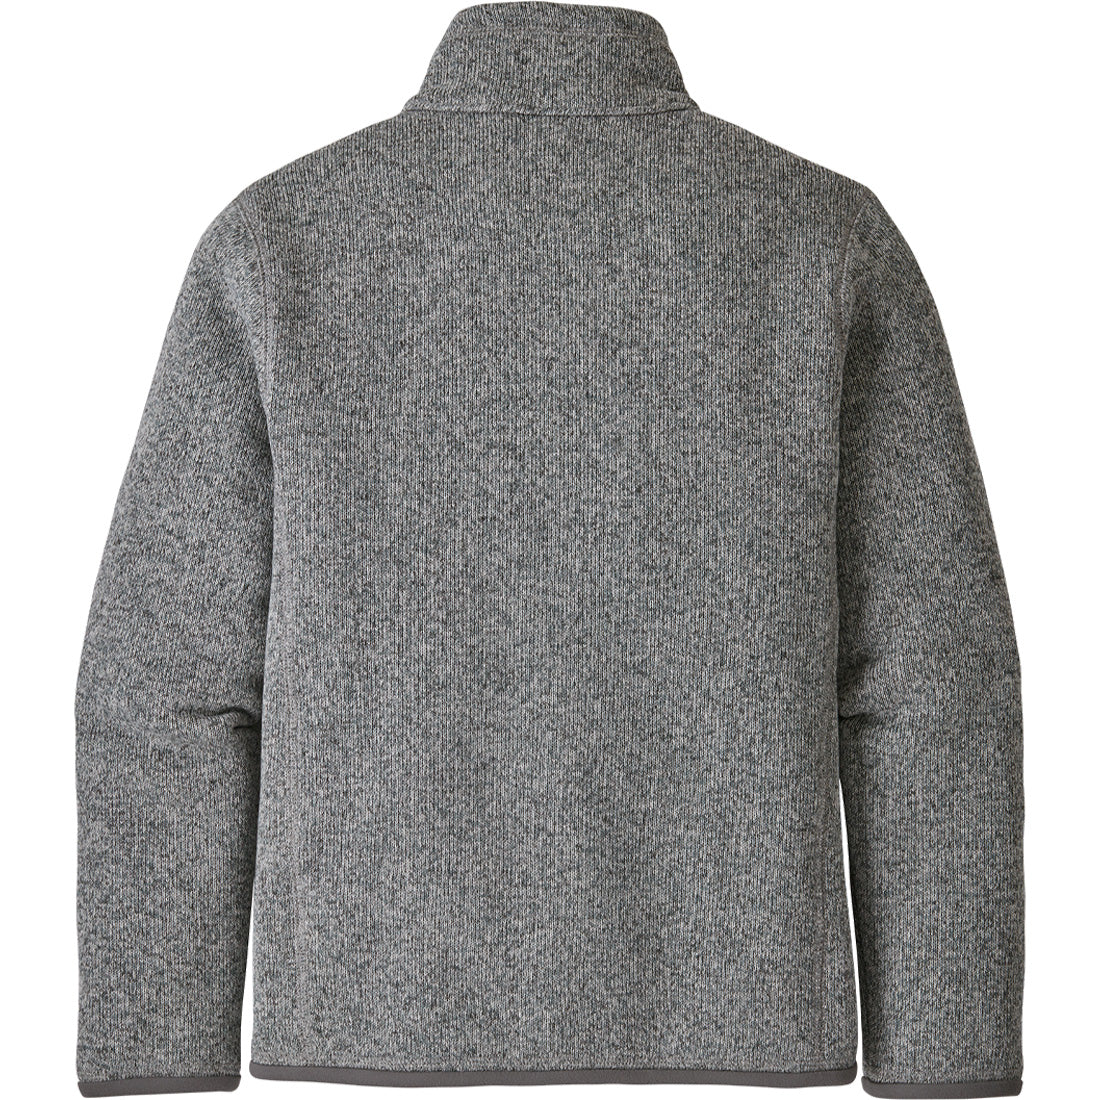 Patagonia Better Sweater Fleece Jacket - Kids